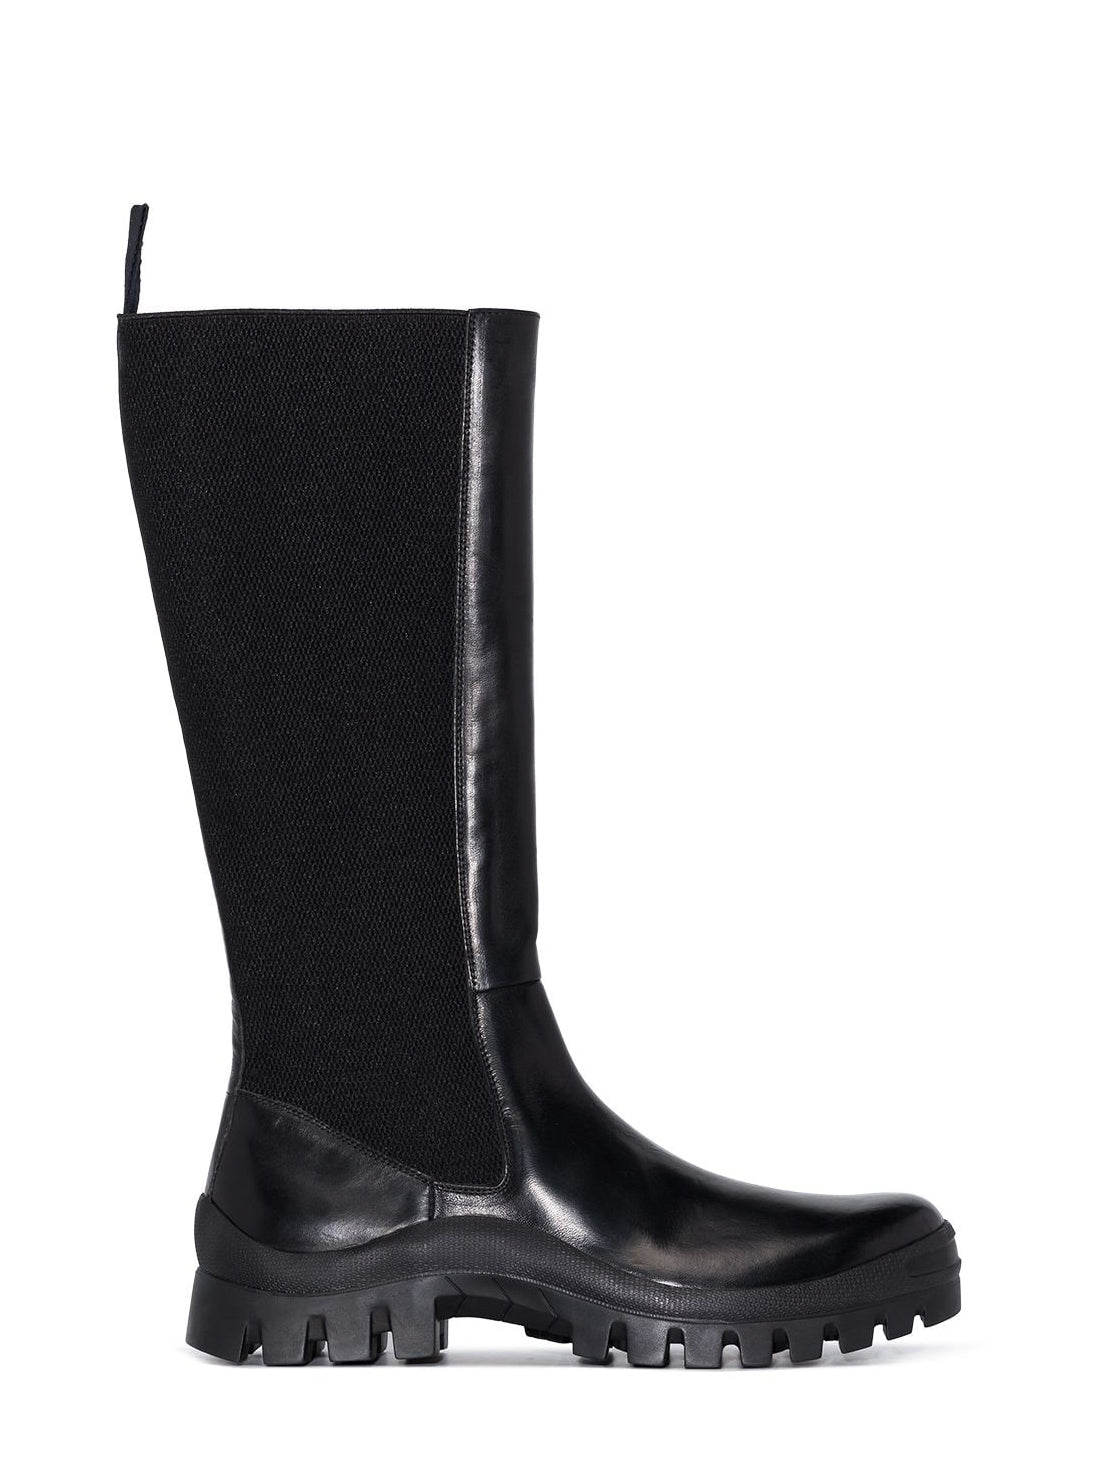 Bitonto knee-high boots, black